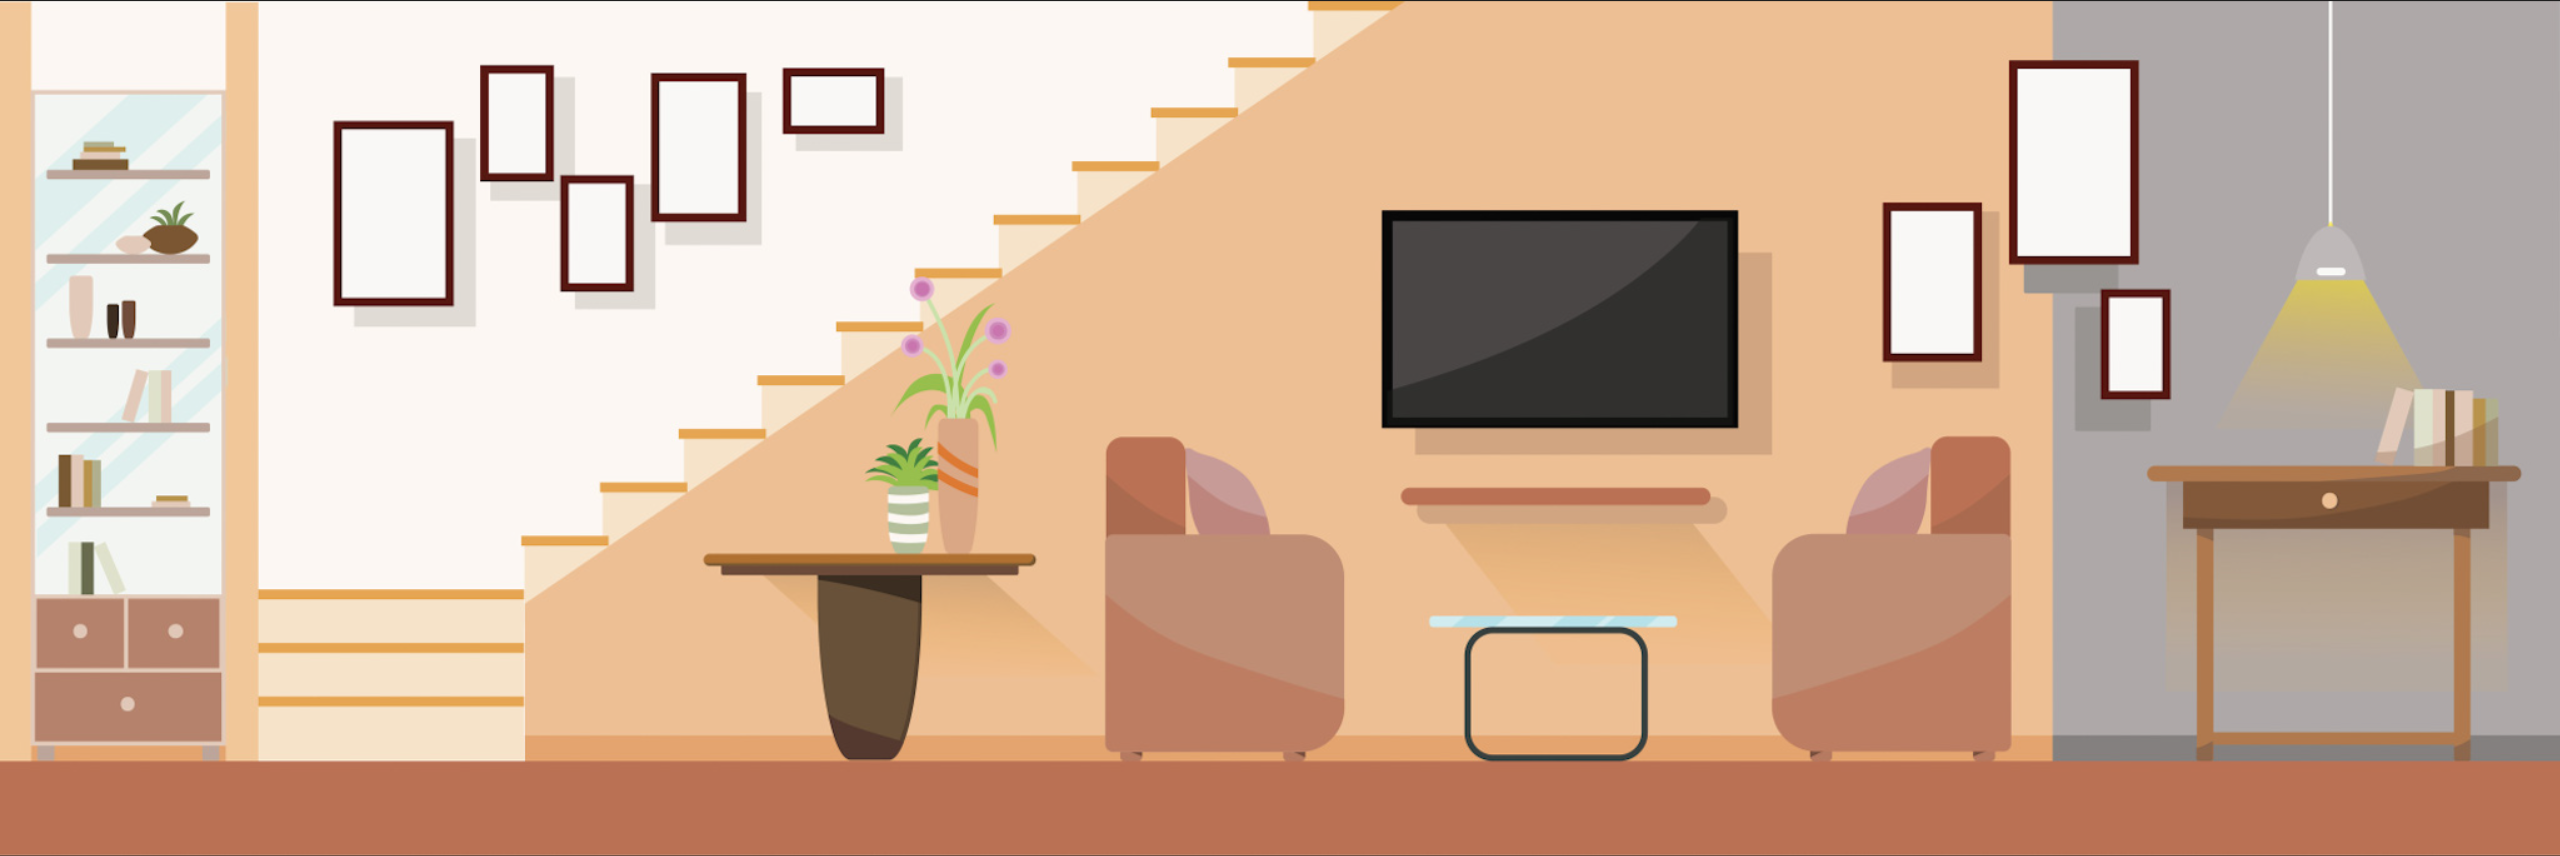 Download Interior Modern living room with furniture. Flat design ...